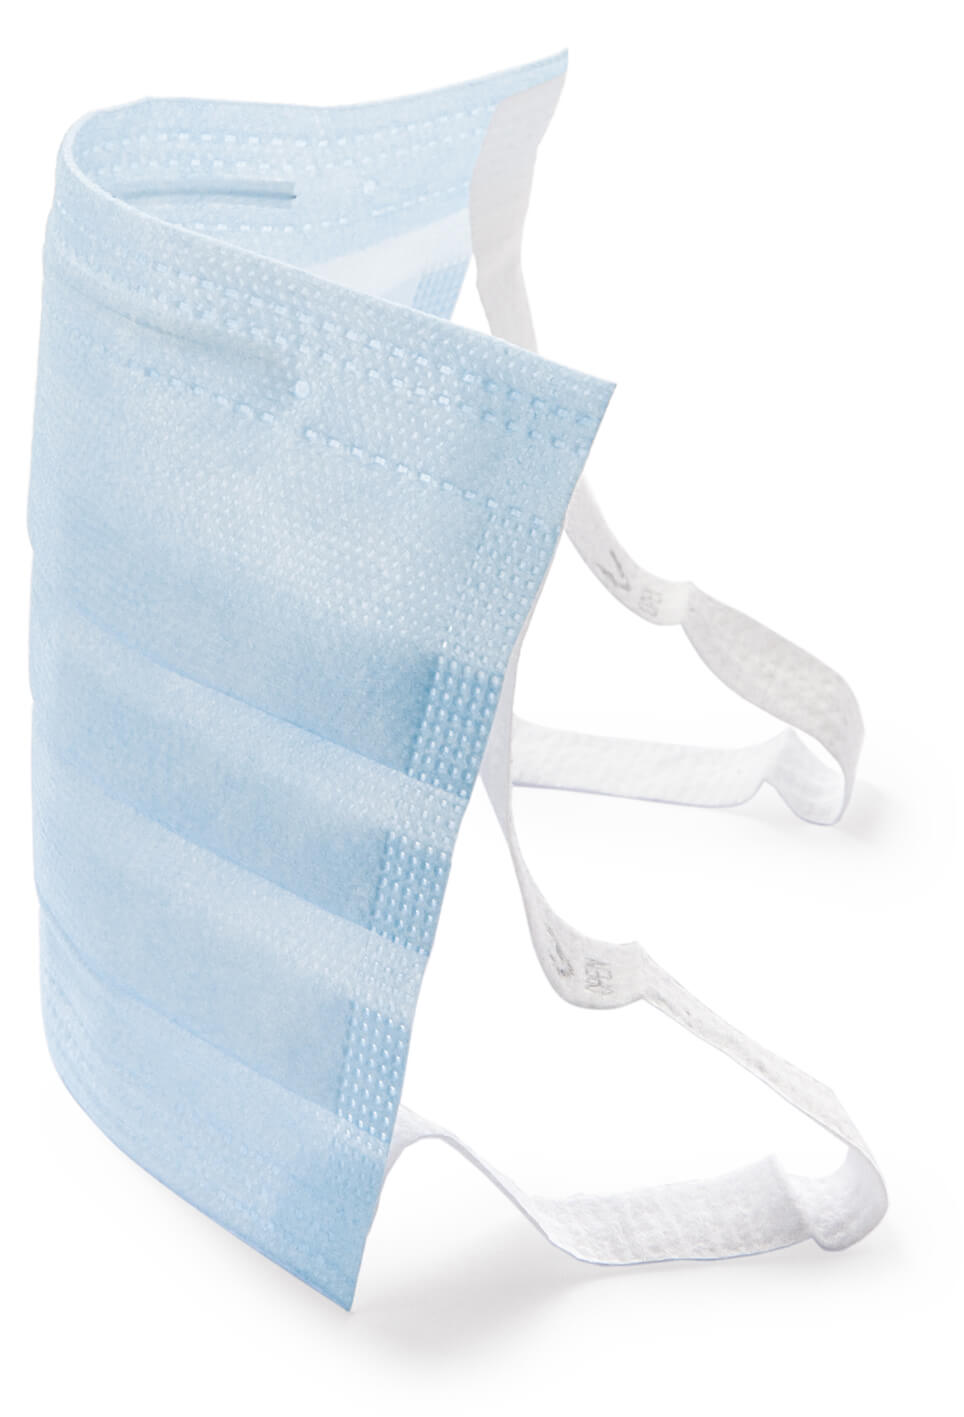 Surgimask medizinische Gesichtsmaske f. Kinder, m. Ohrbändern, blau, 30 Stck.